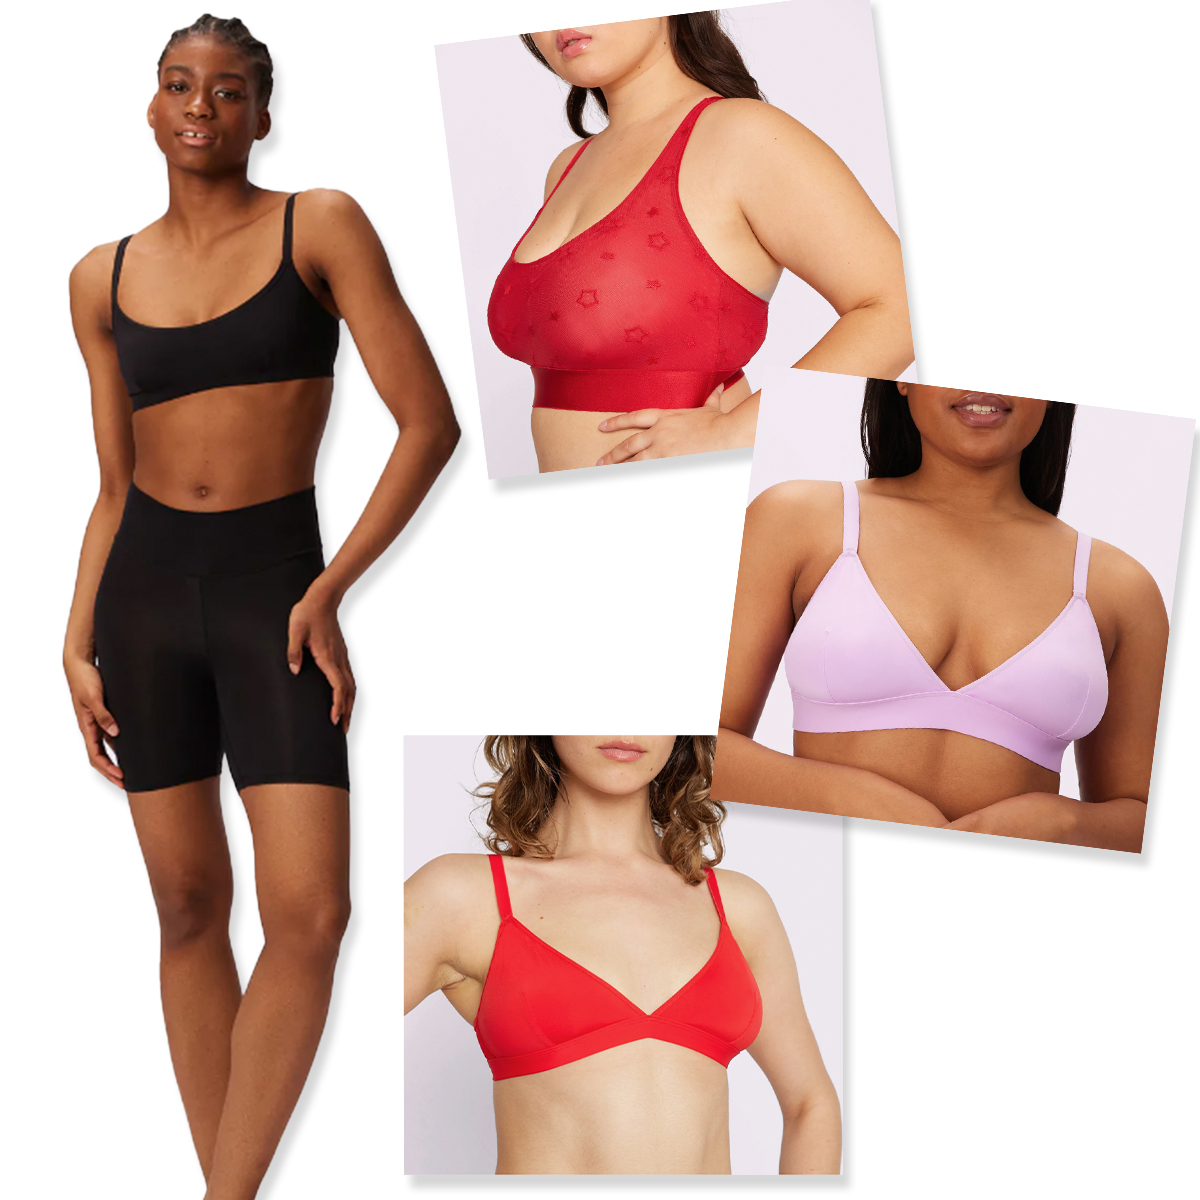 Your body deserve better.Find your fit. #nataparus #bra #fit #lingerie - @ natapar.us in TikTok